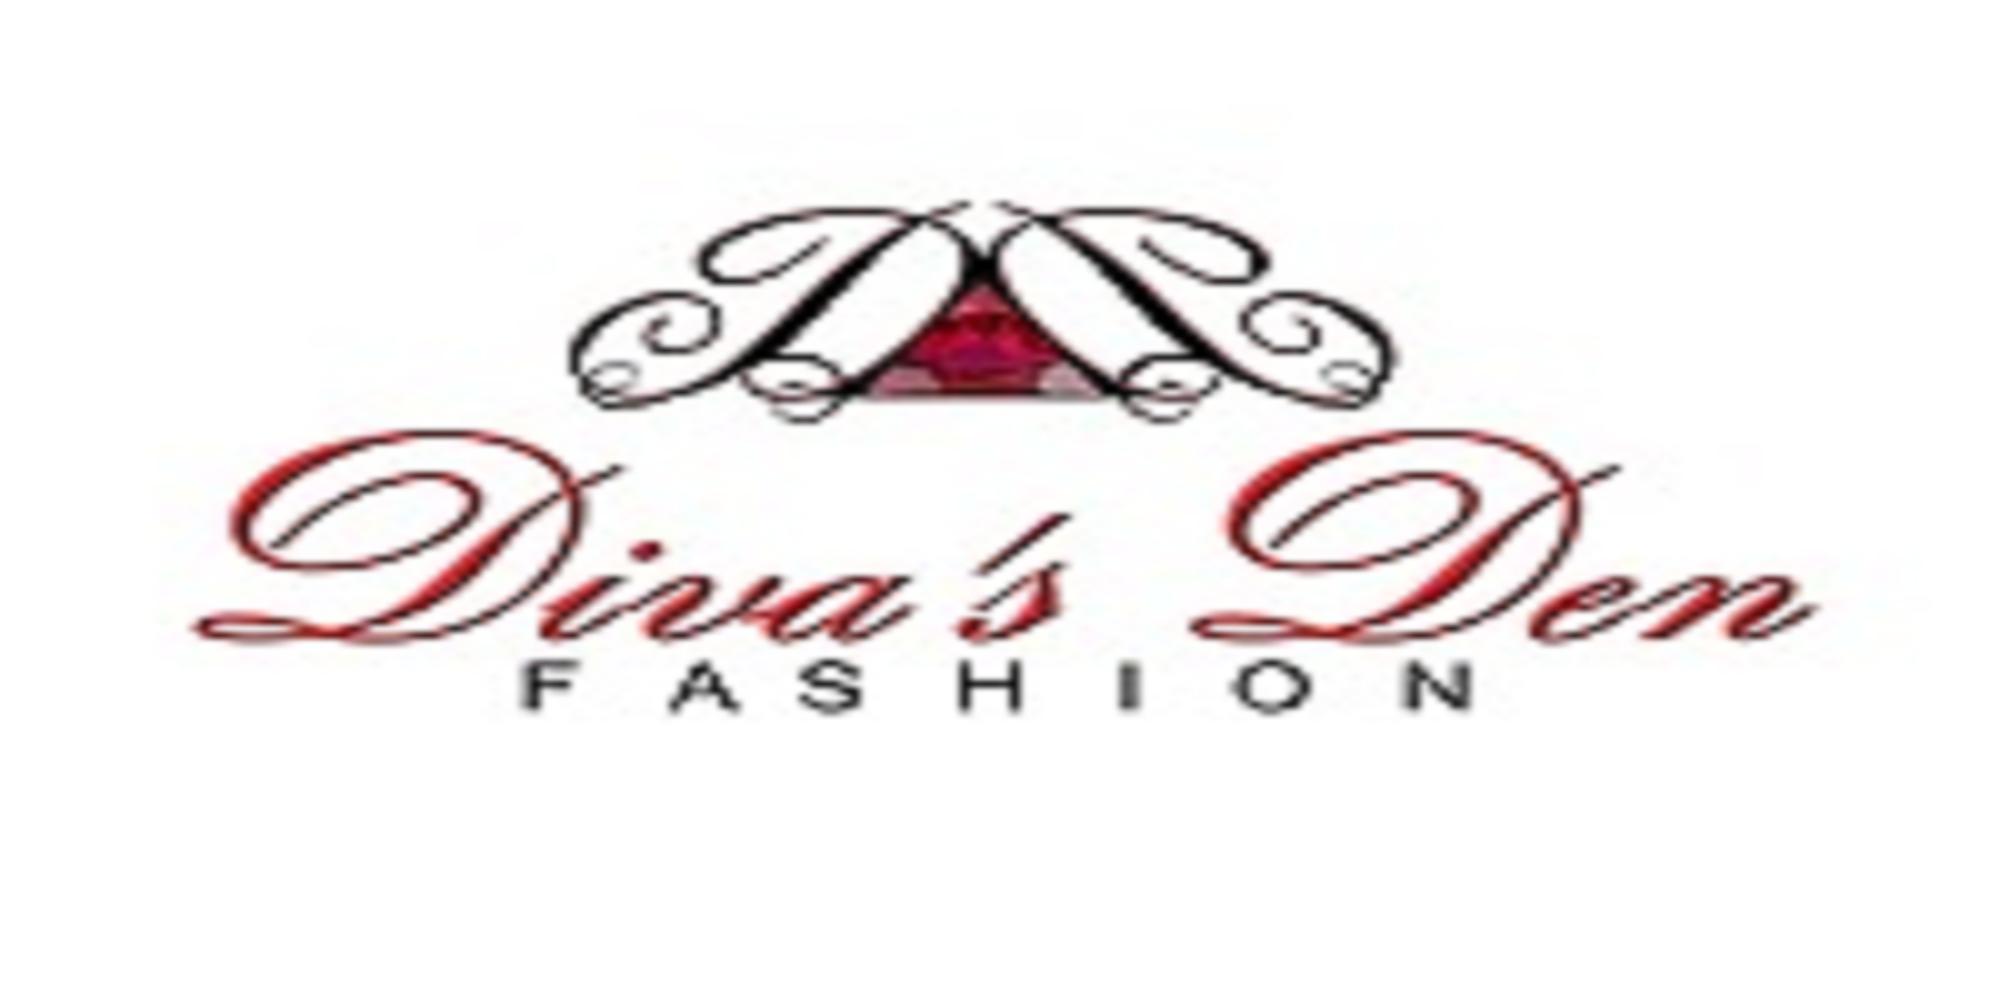 Delta Sigma Theta Sequins Jersey – Diva's Den Fashion, LLC